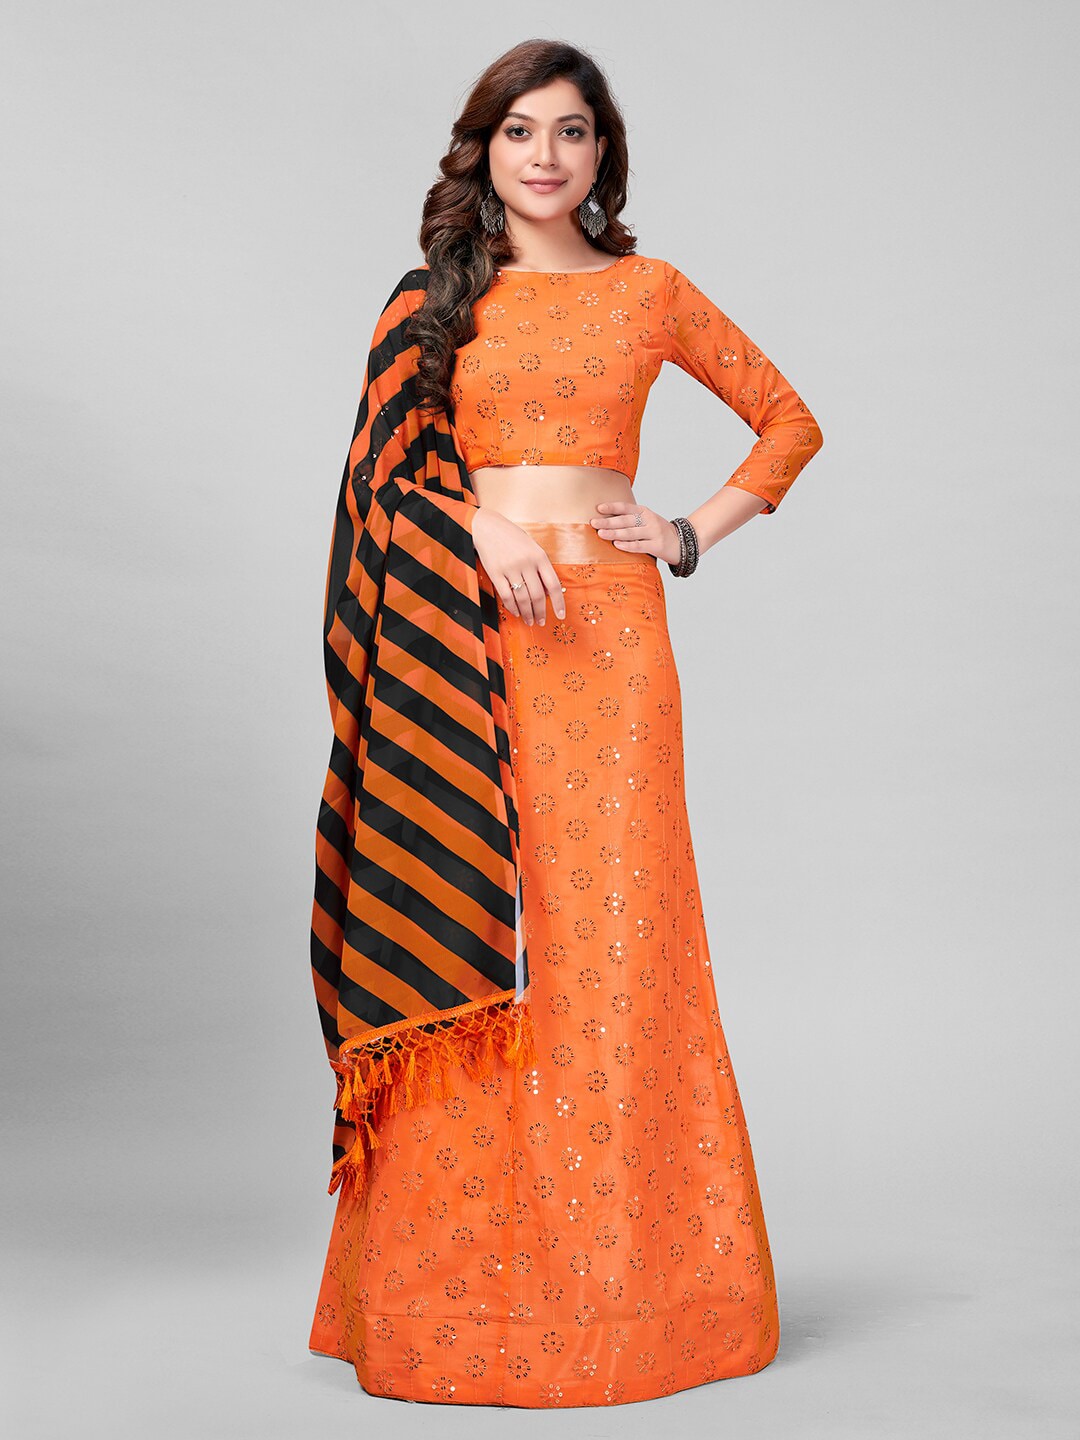 Granthva Fab Orange & Black Embroidered Sequinned Semi-Stitched Lehenga & Unstitched Blouse With Dupatta Price in India